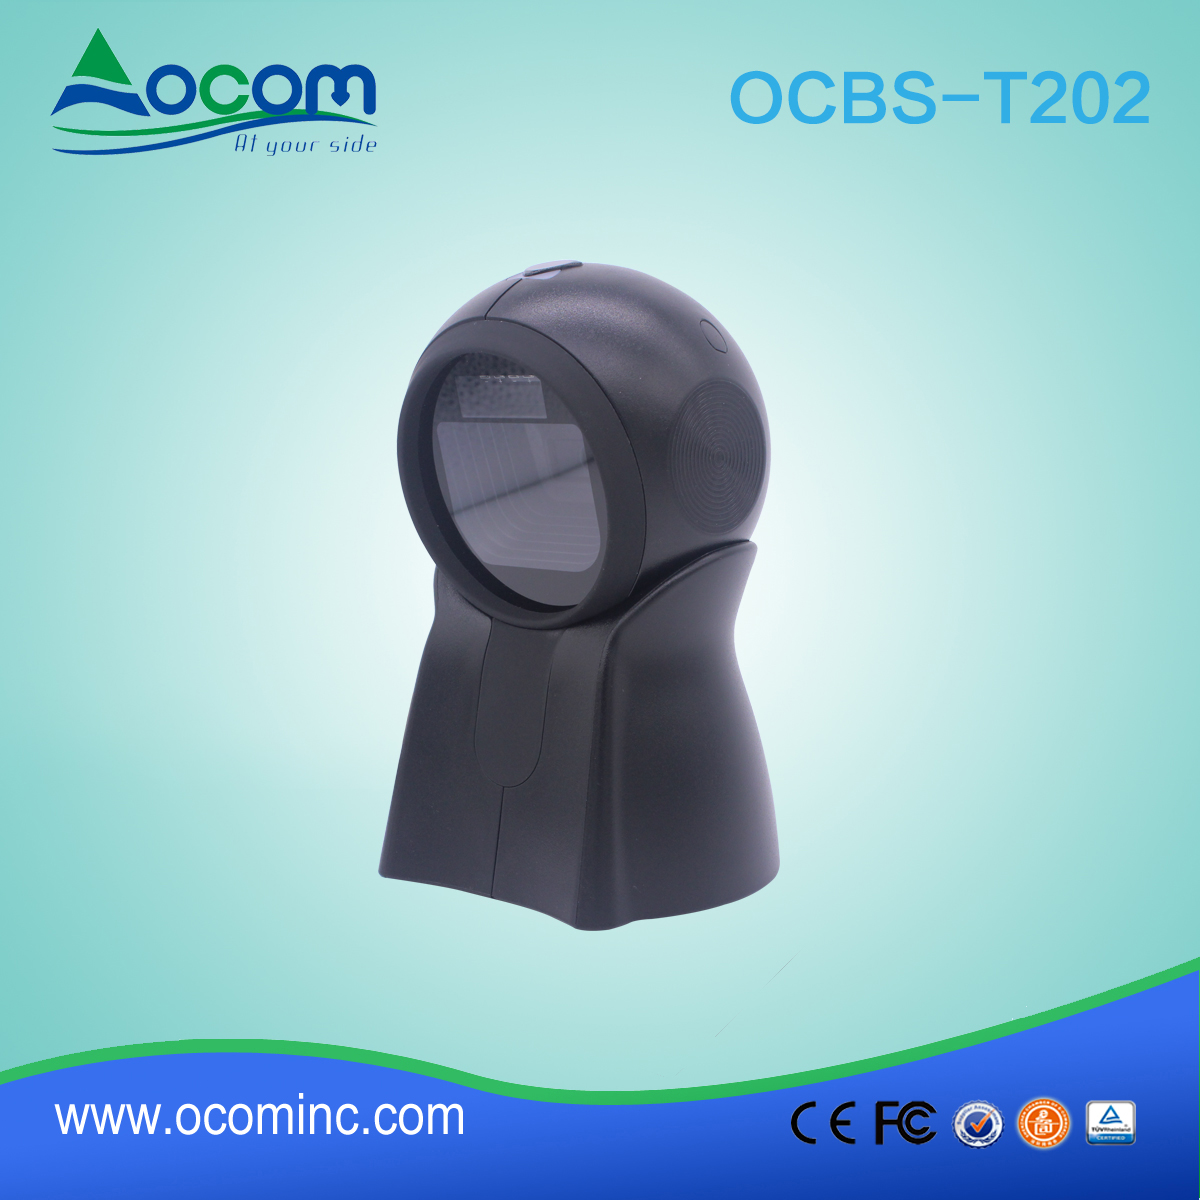 OCBS-T202: υψηλής ταχύτητας POS 2d barcode scanner για σούπερ μάρκετ